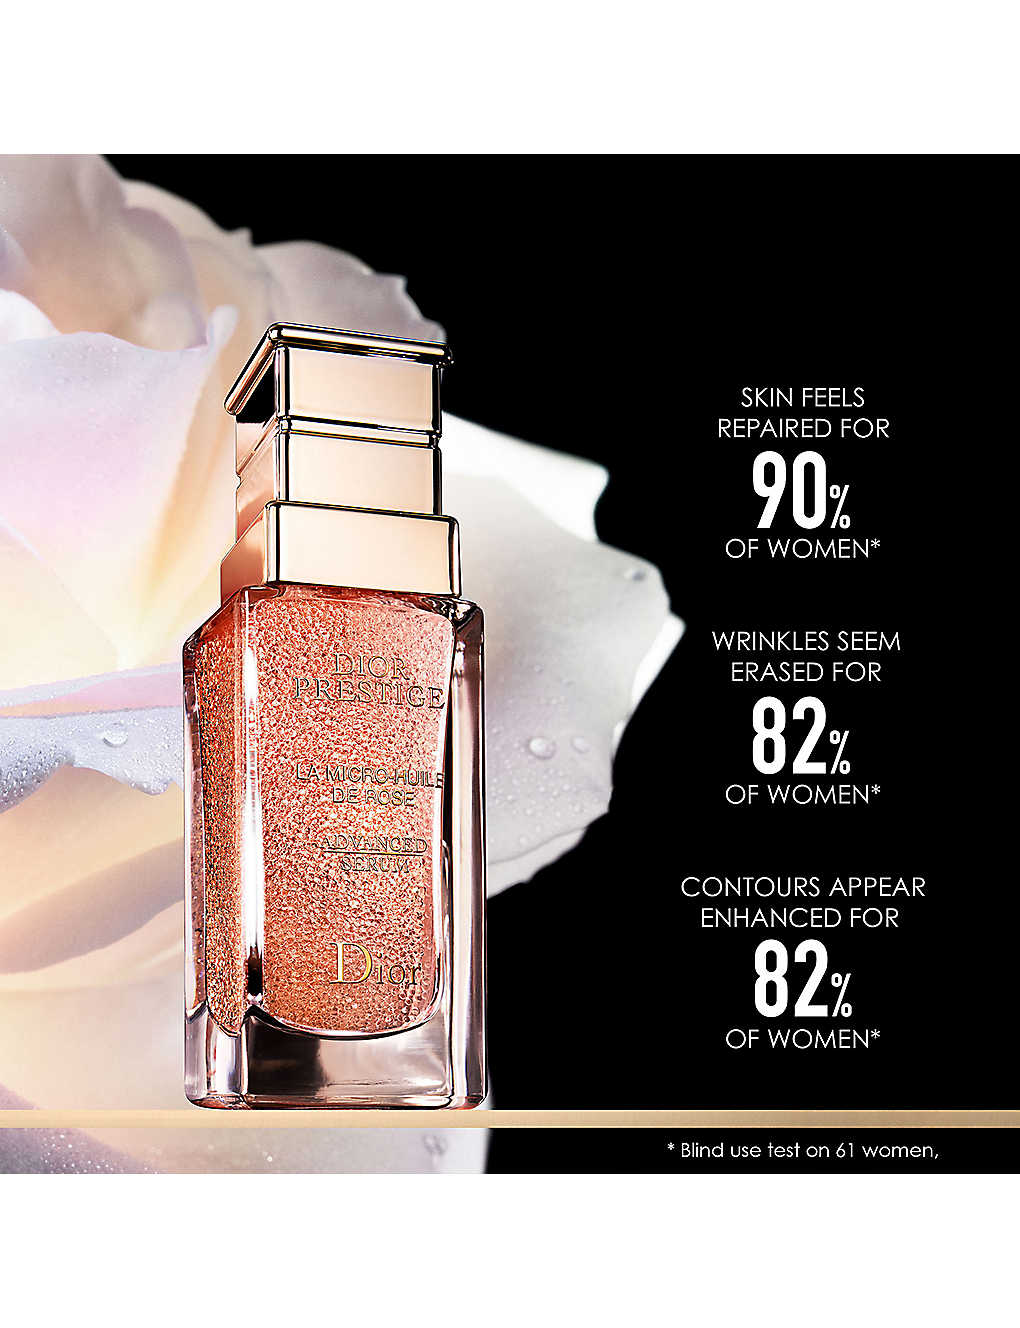 Dior Prestige Exceptional Regenerating Skincare Ritual Gift Set